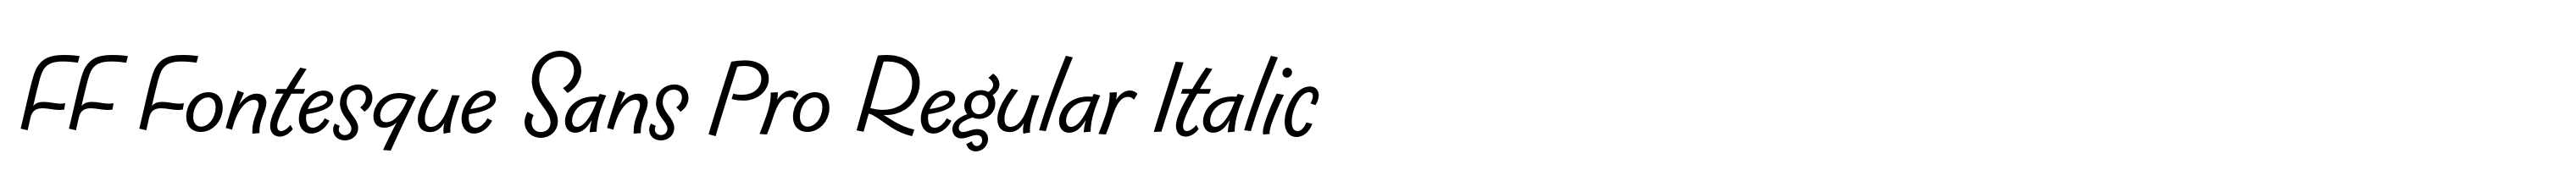 FF Fontesque Sans Pro Regular Italic